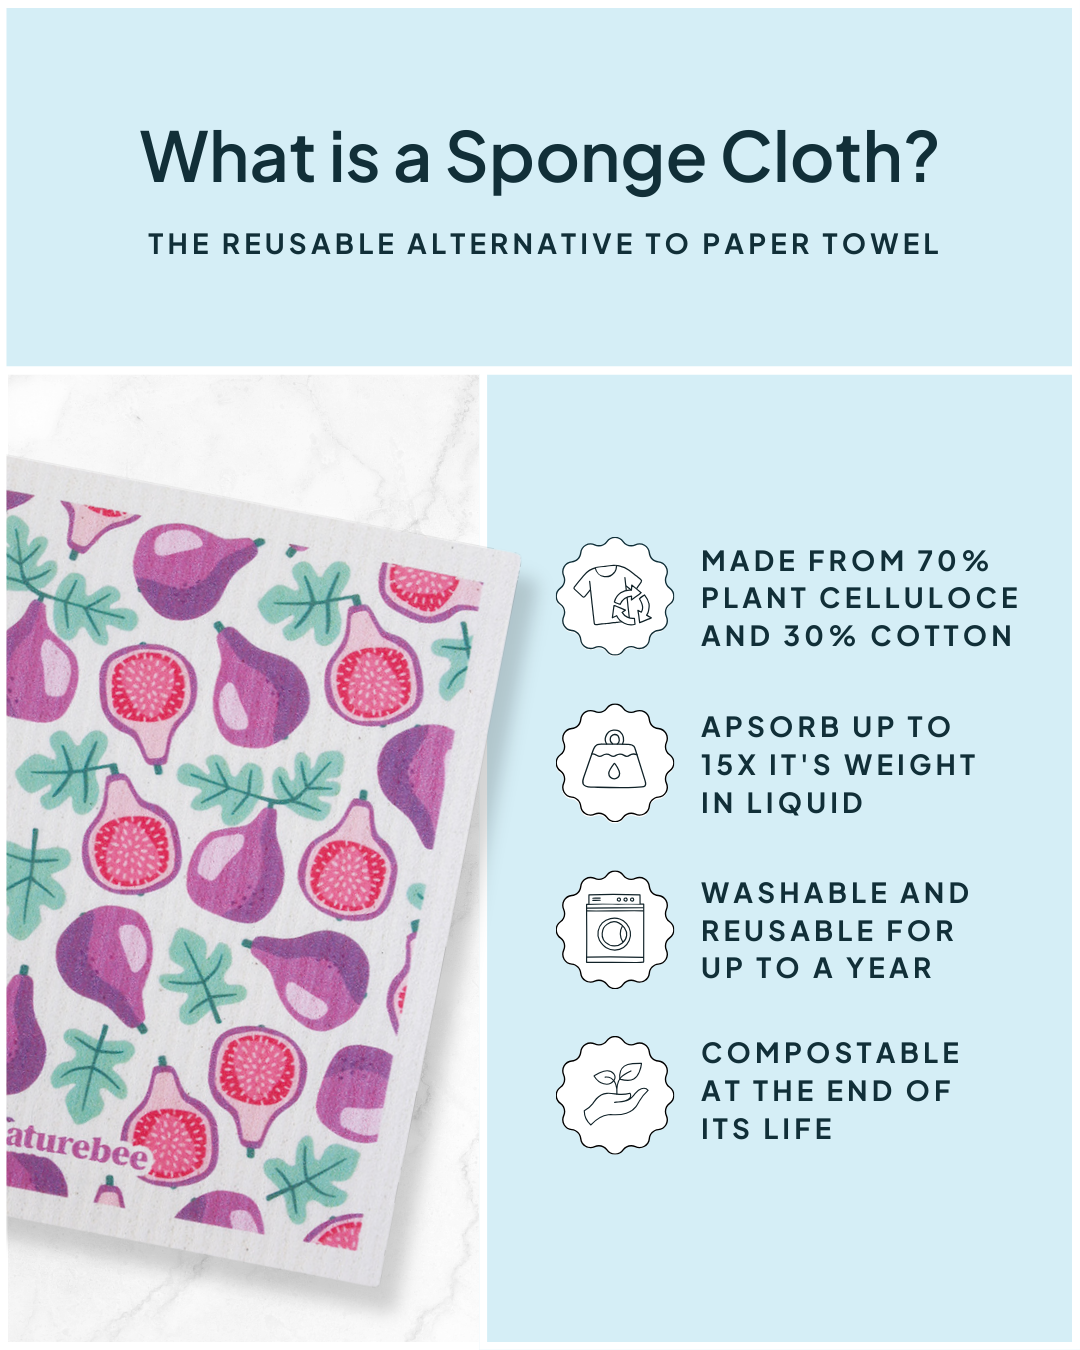 Sponge Cloth Figs | Nature Bee